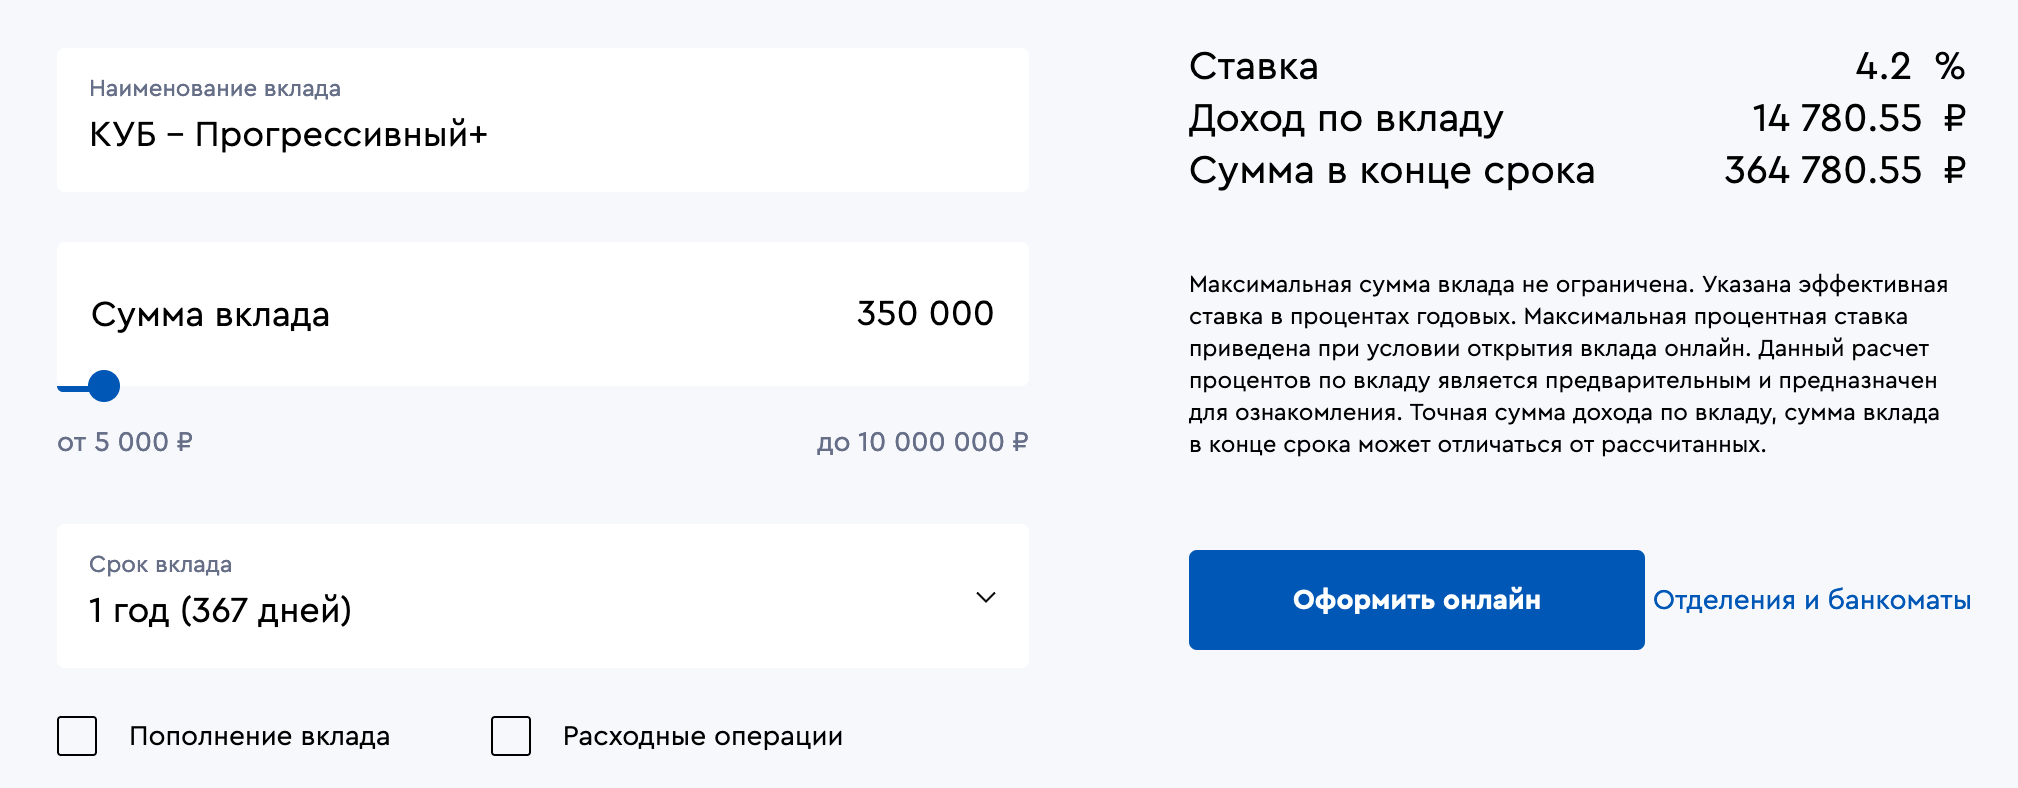 Вклад в Кредит Урал Банке